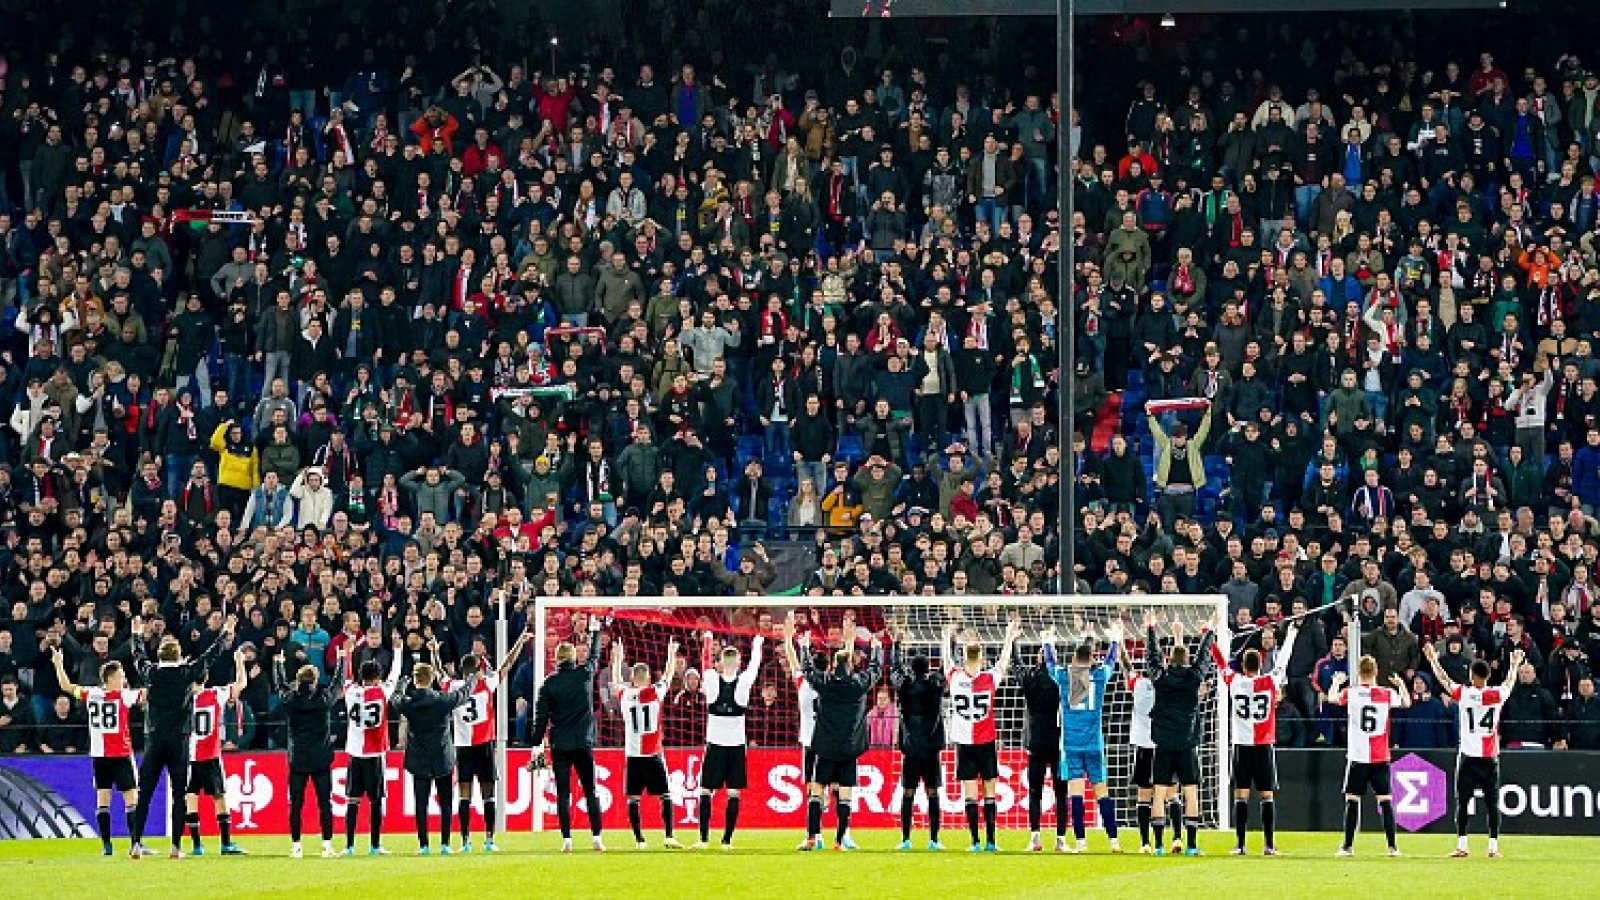 ANALYSE | Wat betekenen de cijfers in het jaarverslag van Feyenoord